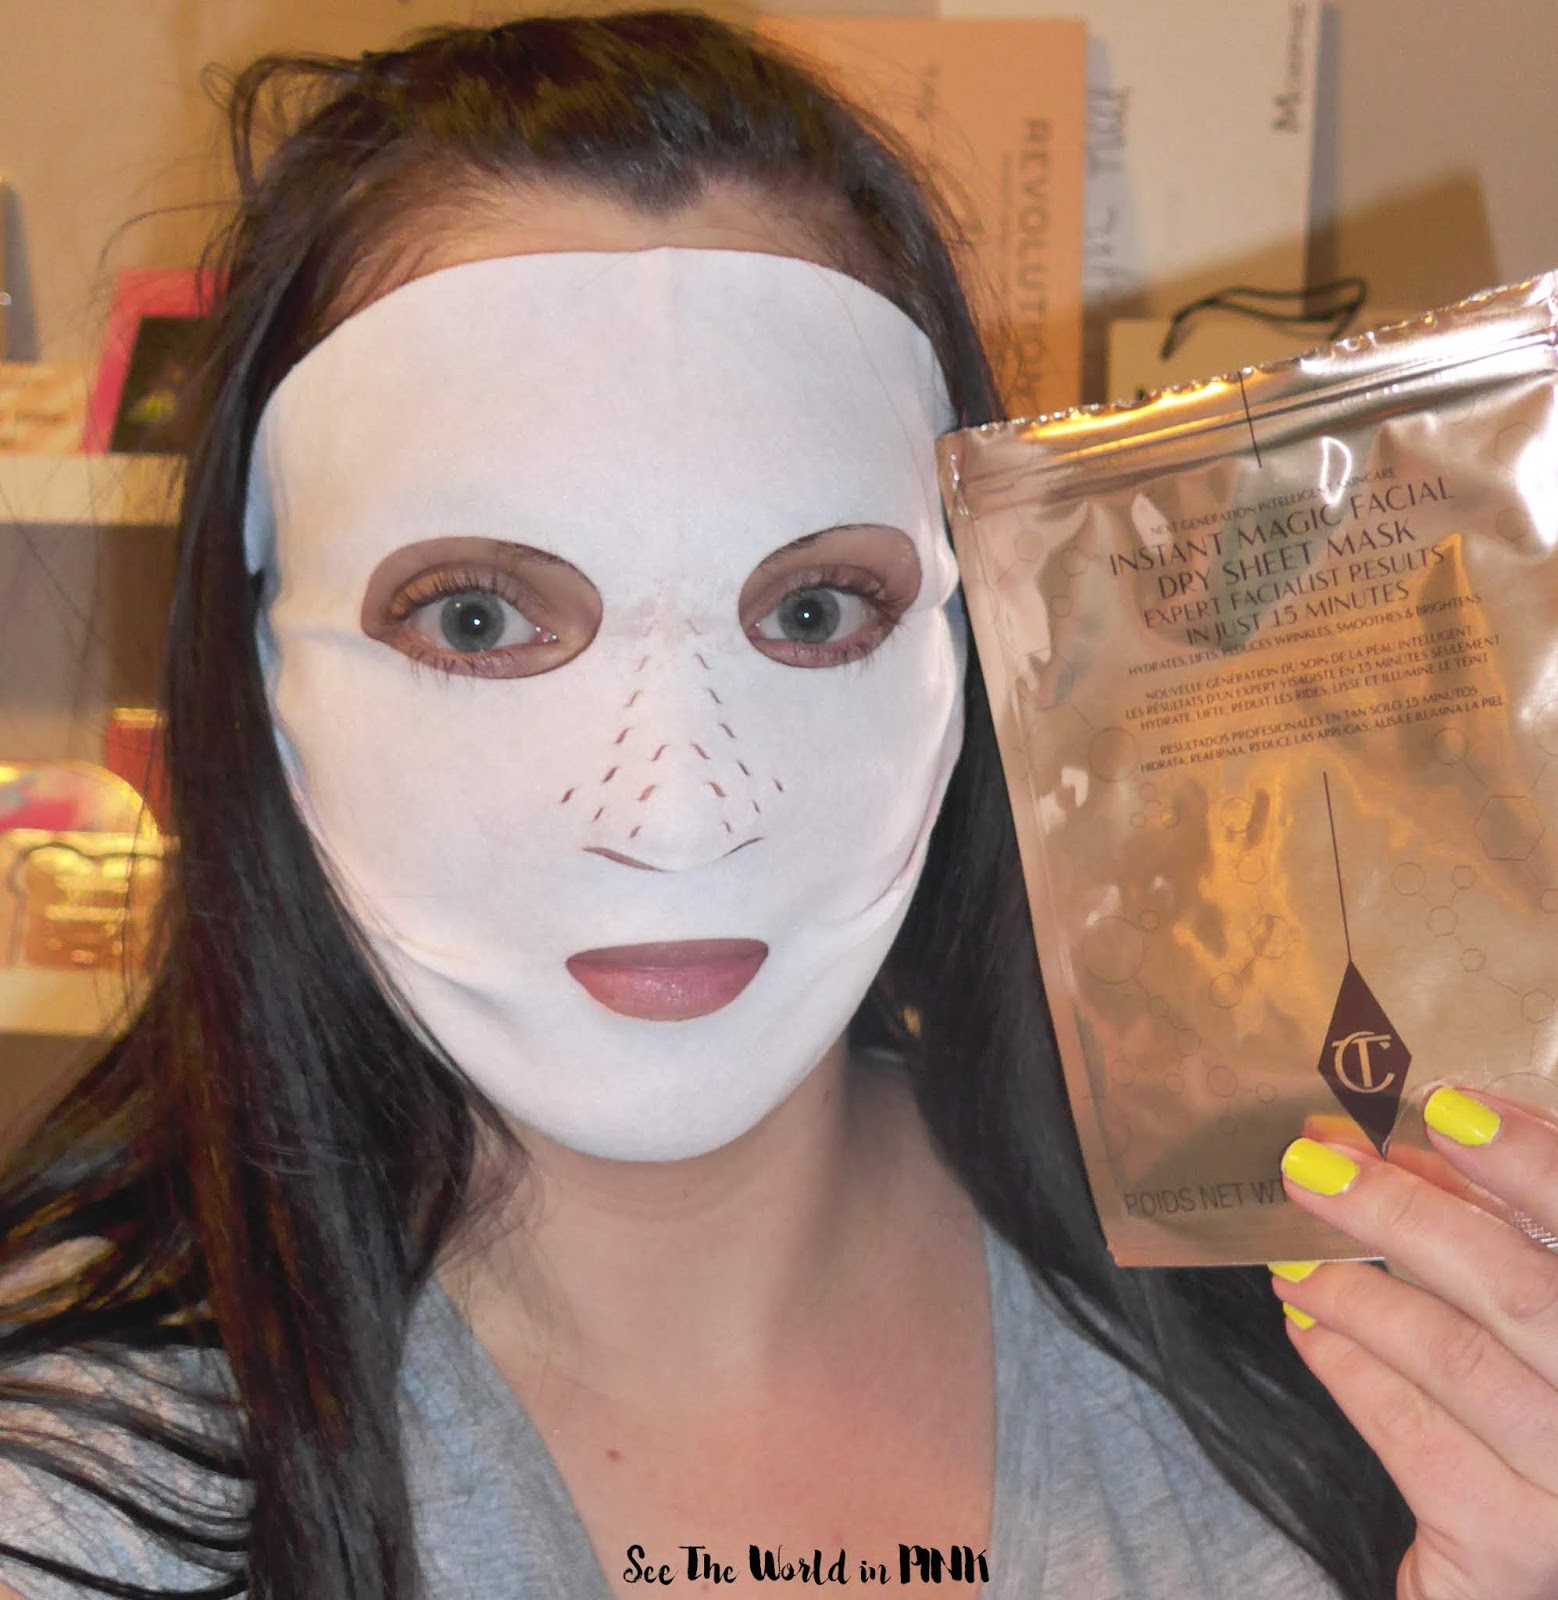 Skincare Sunday - Charlotte Tilbury Instant Magic Facial Dry Sheet Mask